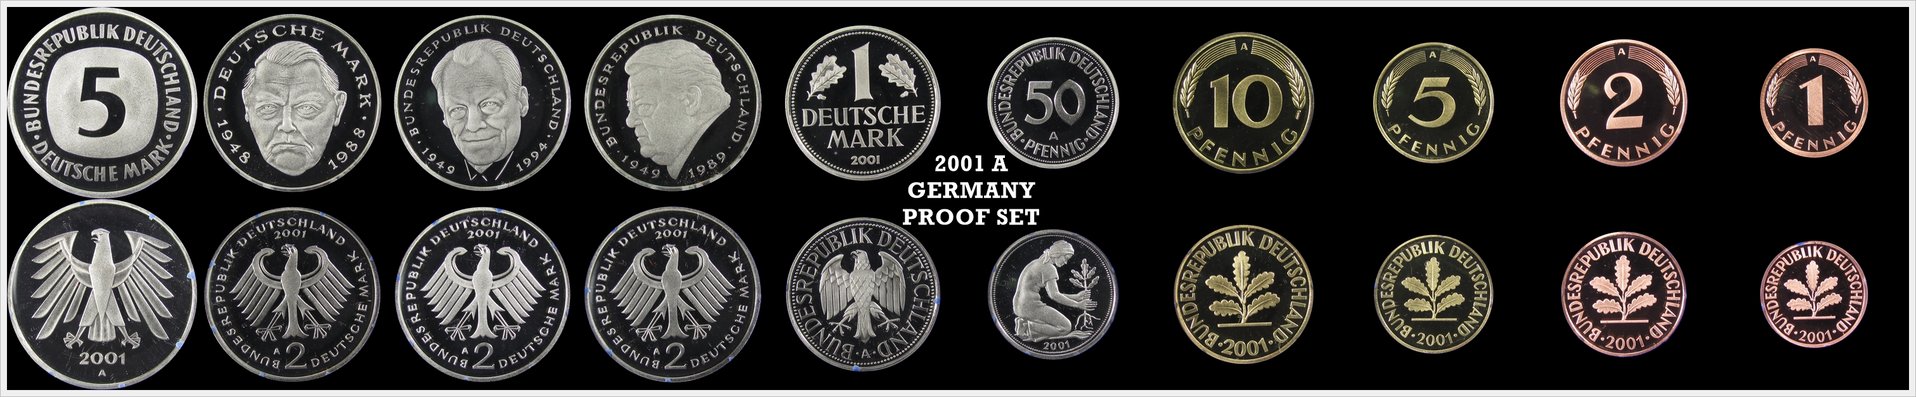 Germany 2001a Proof Set.jpg